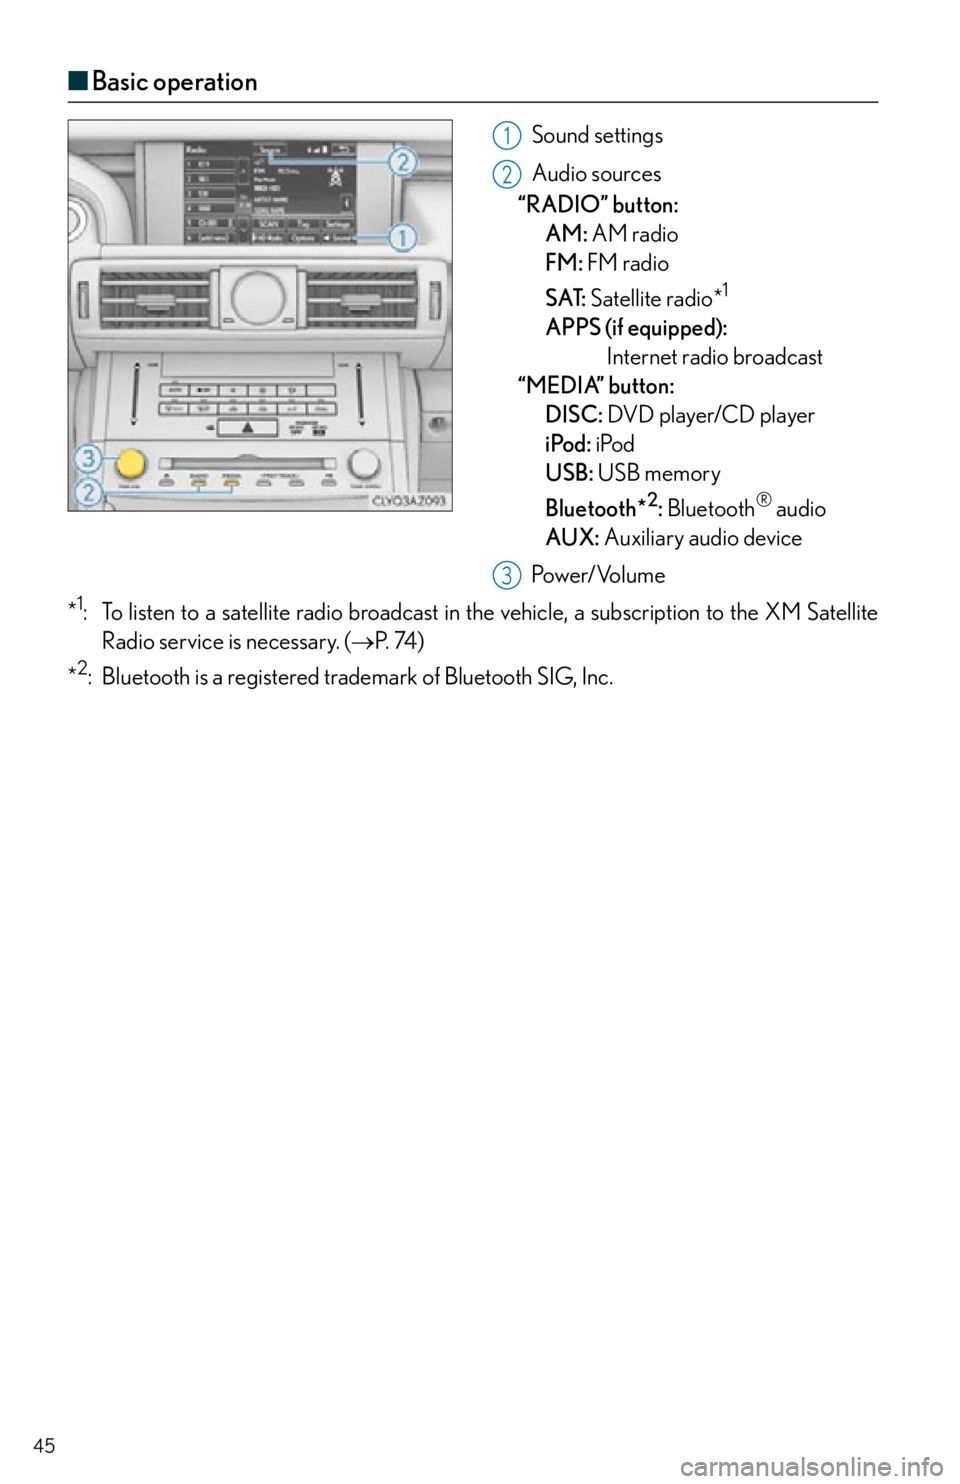 Lexus IS250 2015  Audio menu screen operation / LEXUS 2015 IS250,IS350 OWNERS MANUAL QUICK GUIDE (OM53C80U) 45
■Basic operation
Sound settings
Audio sources
“RADIO” button: 
AM:  AM
 radio
FM: FM radio
SAT: Satellite radio*
1
APPS (if equipped):  
Internet radio broadcast
“MEDIA” button: 
DISC: